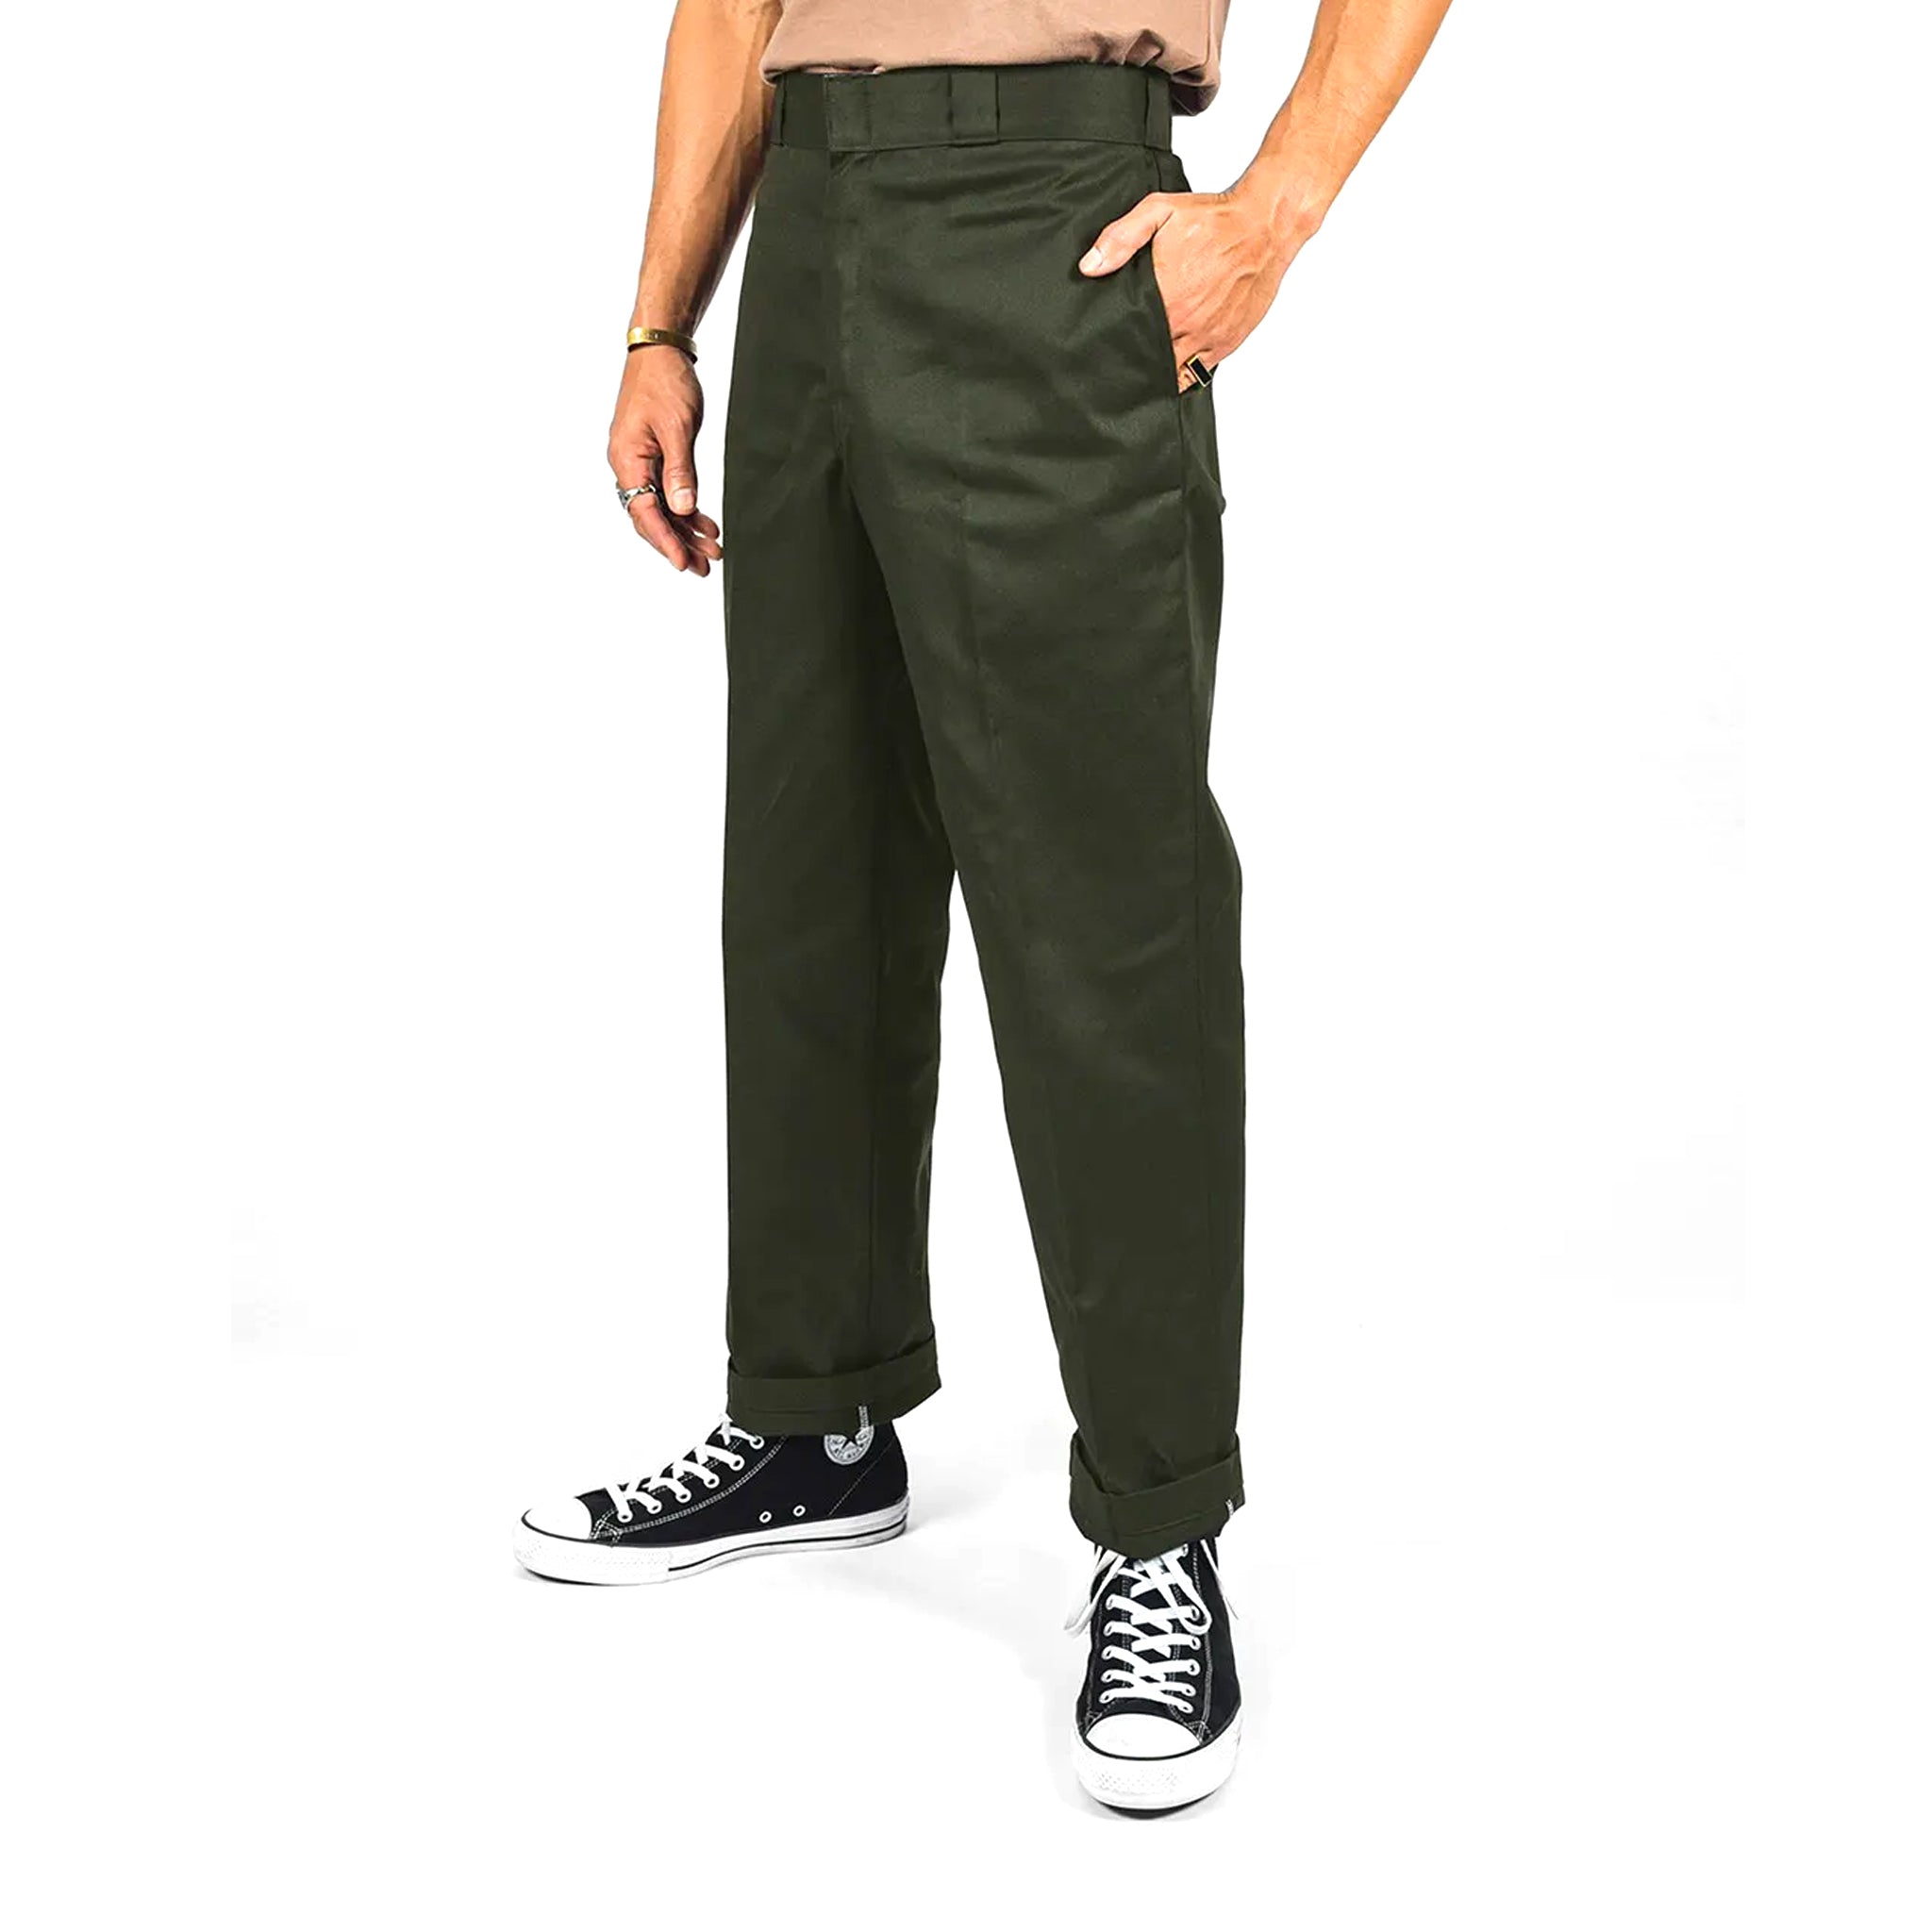 Dickies 874 Original Fit Pants Olive Green